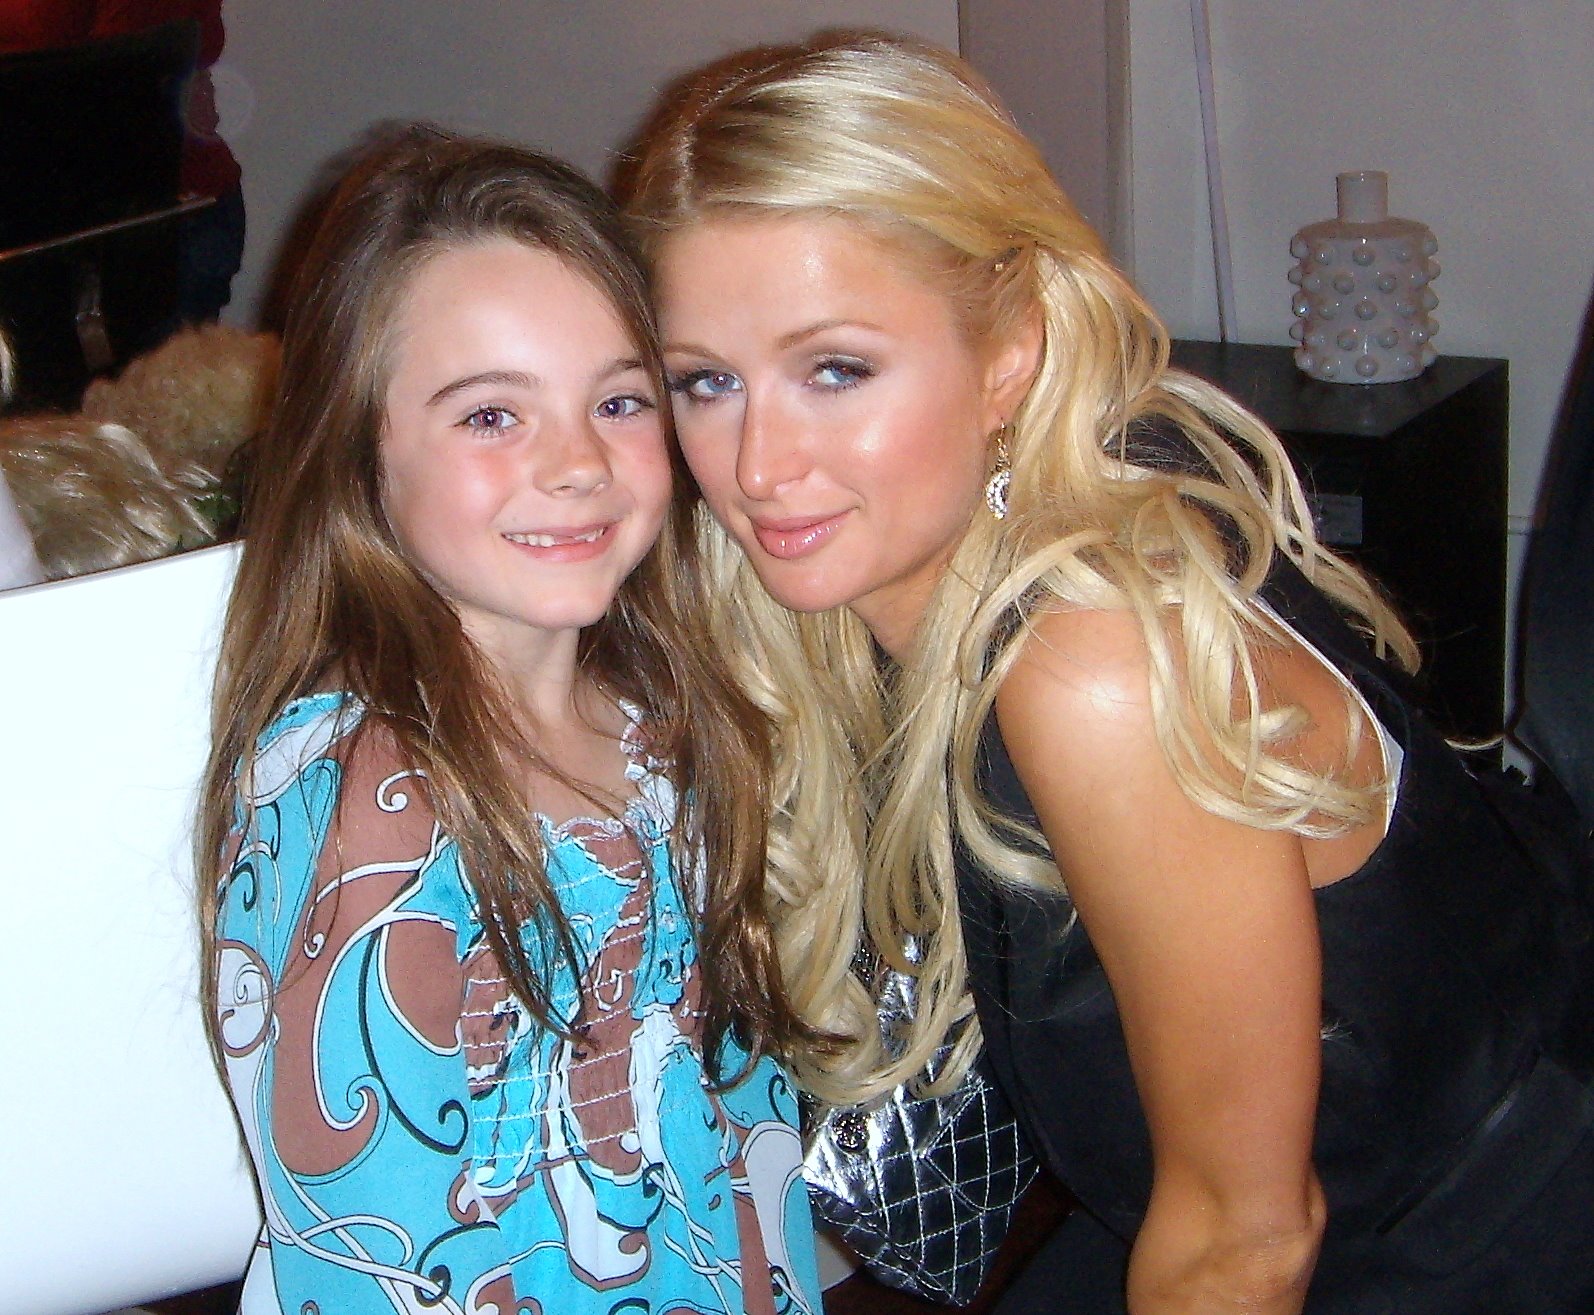 Ava with Paris Hilton at the Smashing Pumpkins Photo shoot